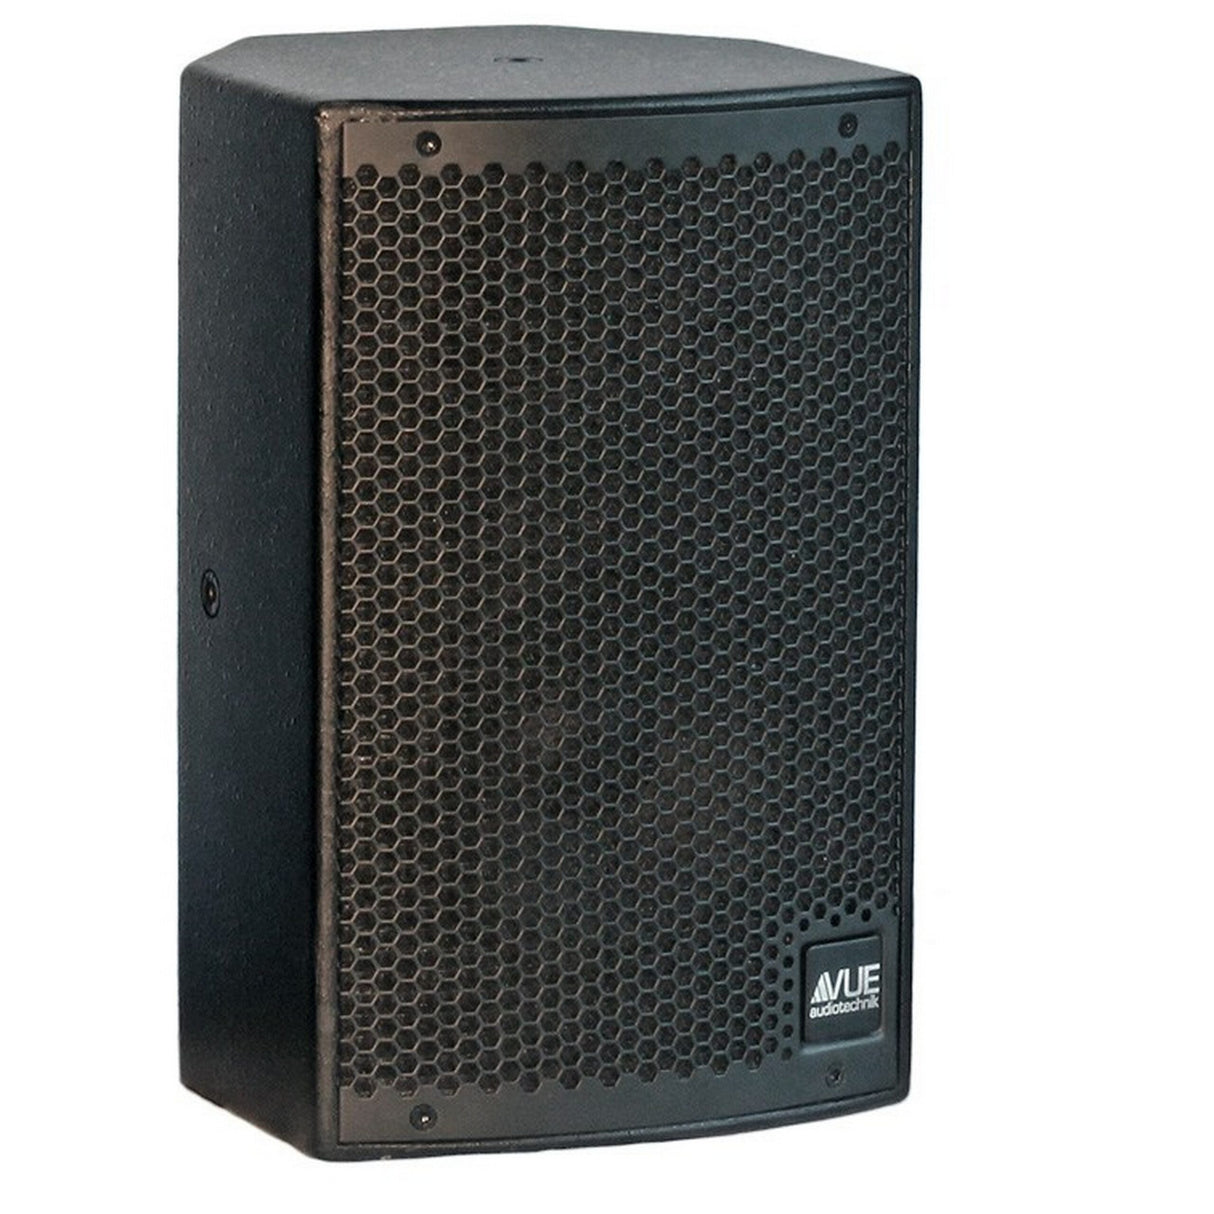 VUE Audiotechnik i-6a 6-Inch 2-Way Full Range Loudspeaker with Built In Power Amplifier, 230V, Black